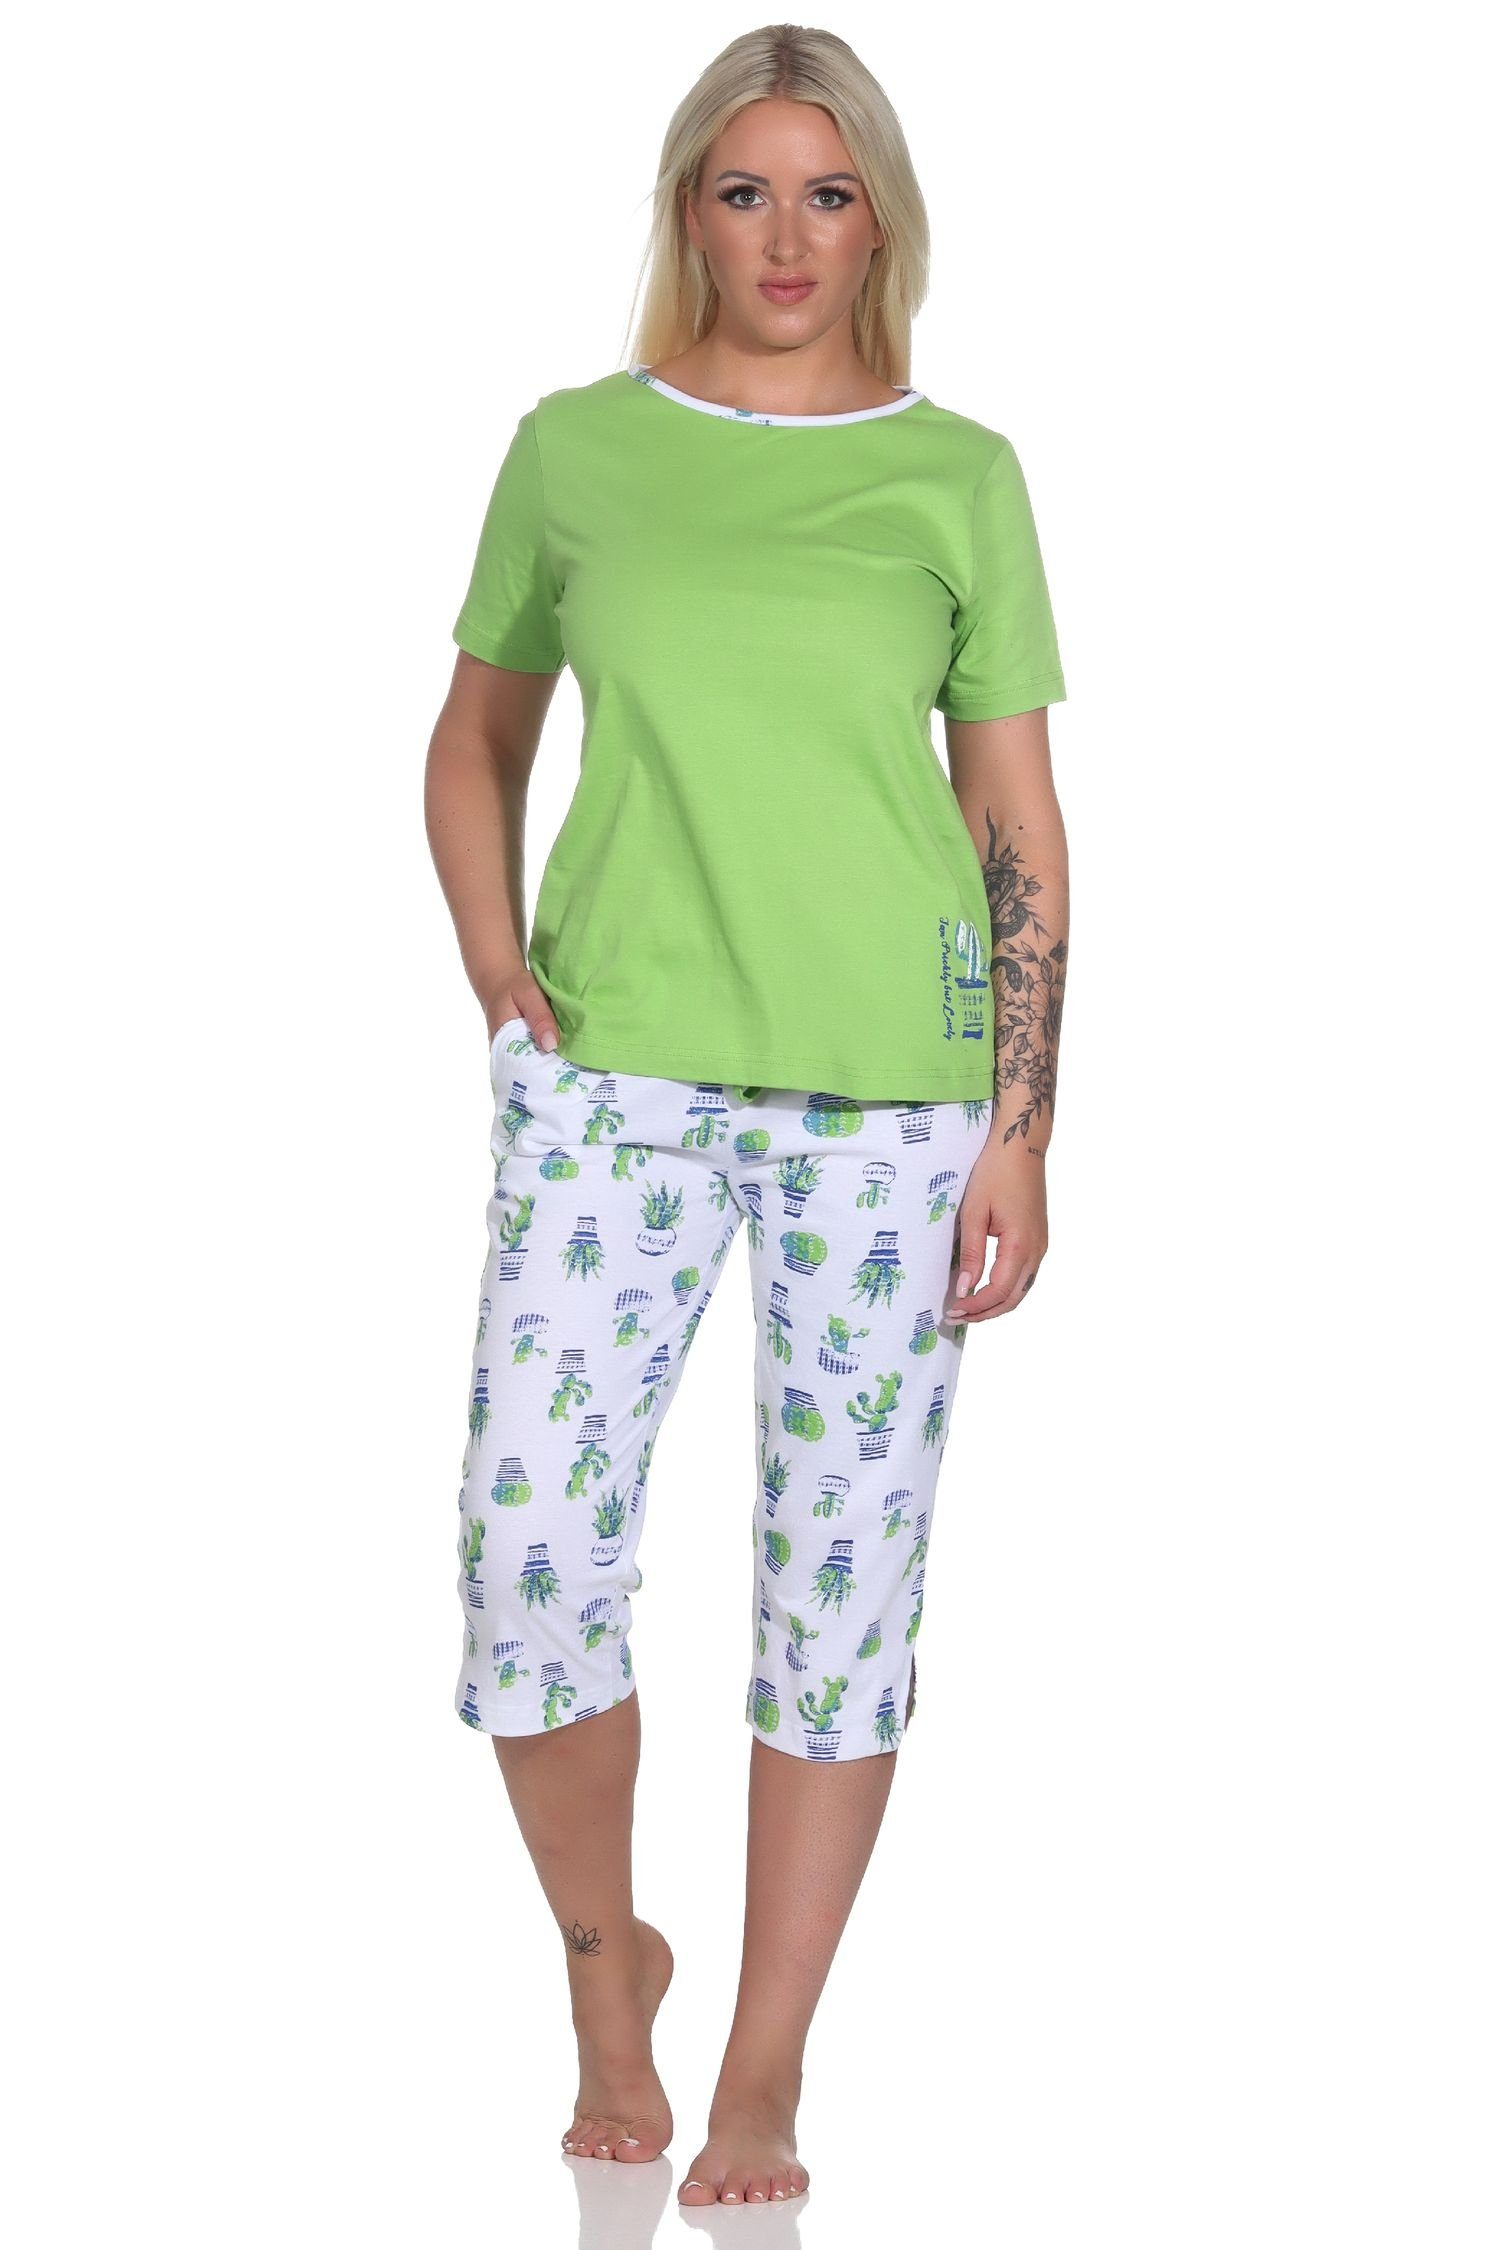 mit grün Pyjama Normann Capri Kaktus als Motiv Damen Kurzarm Schlafanzug